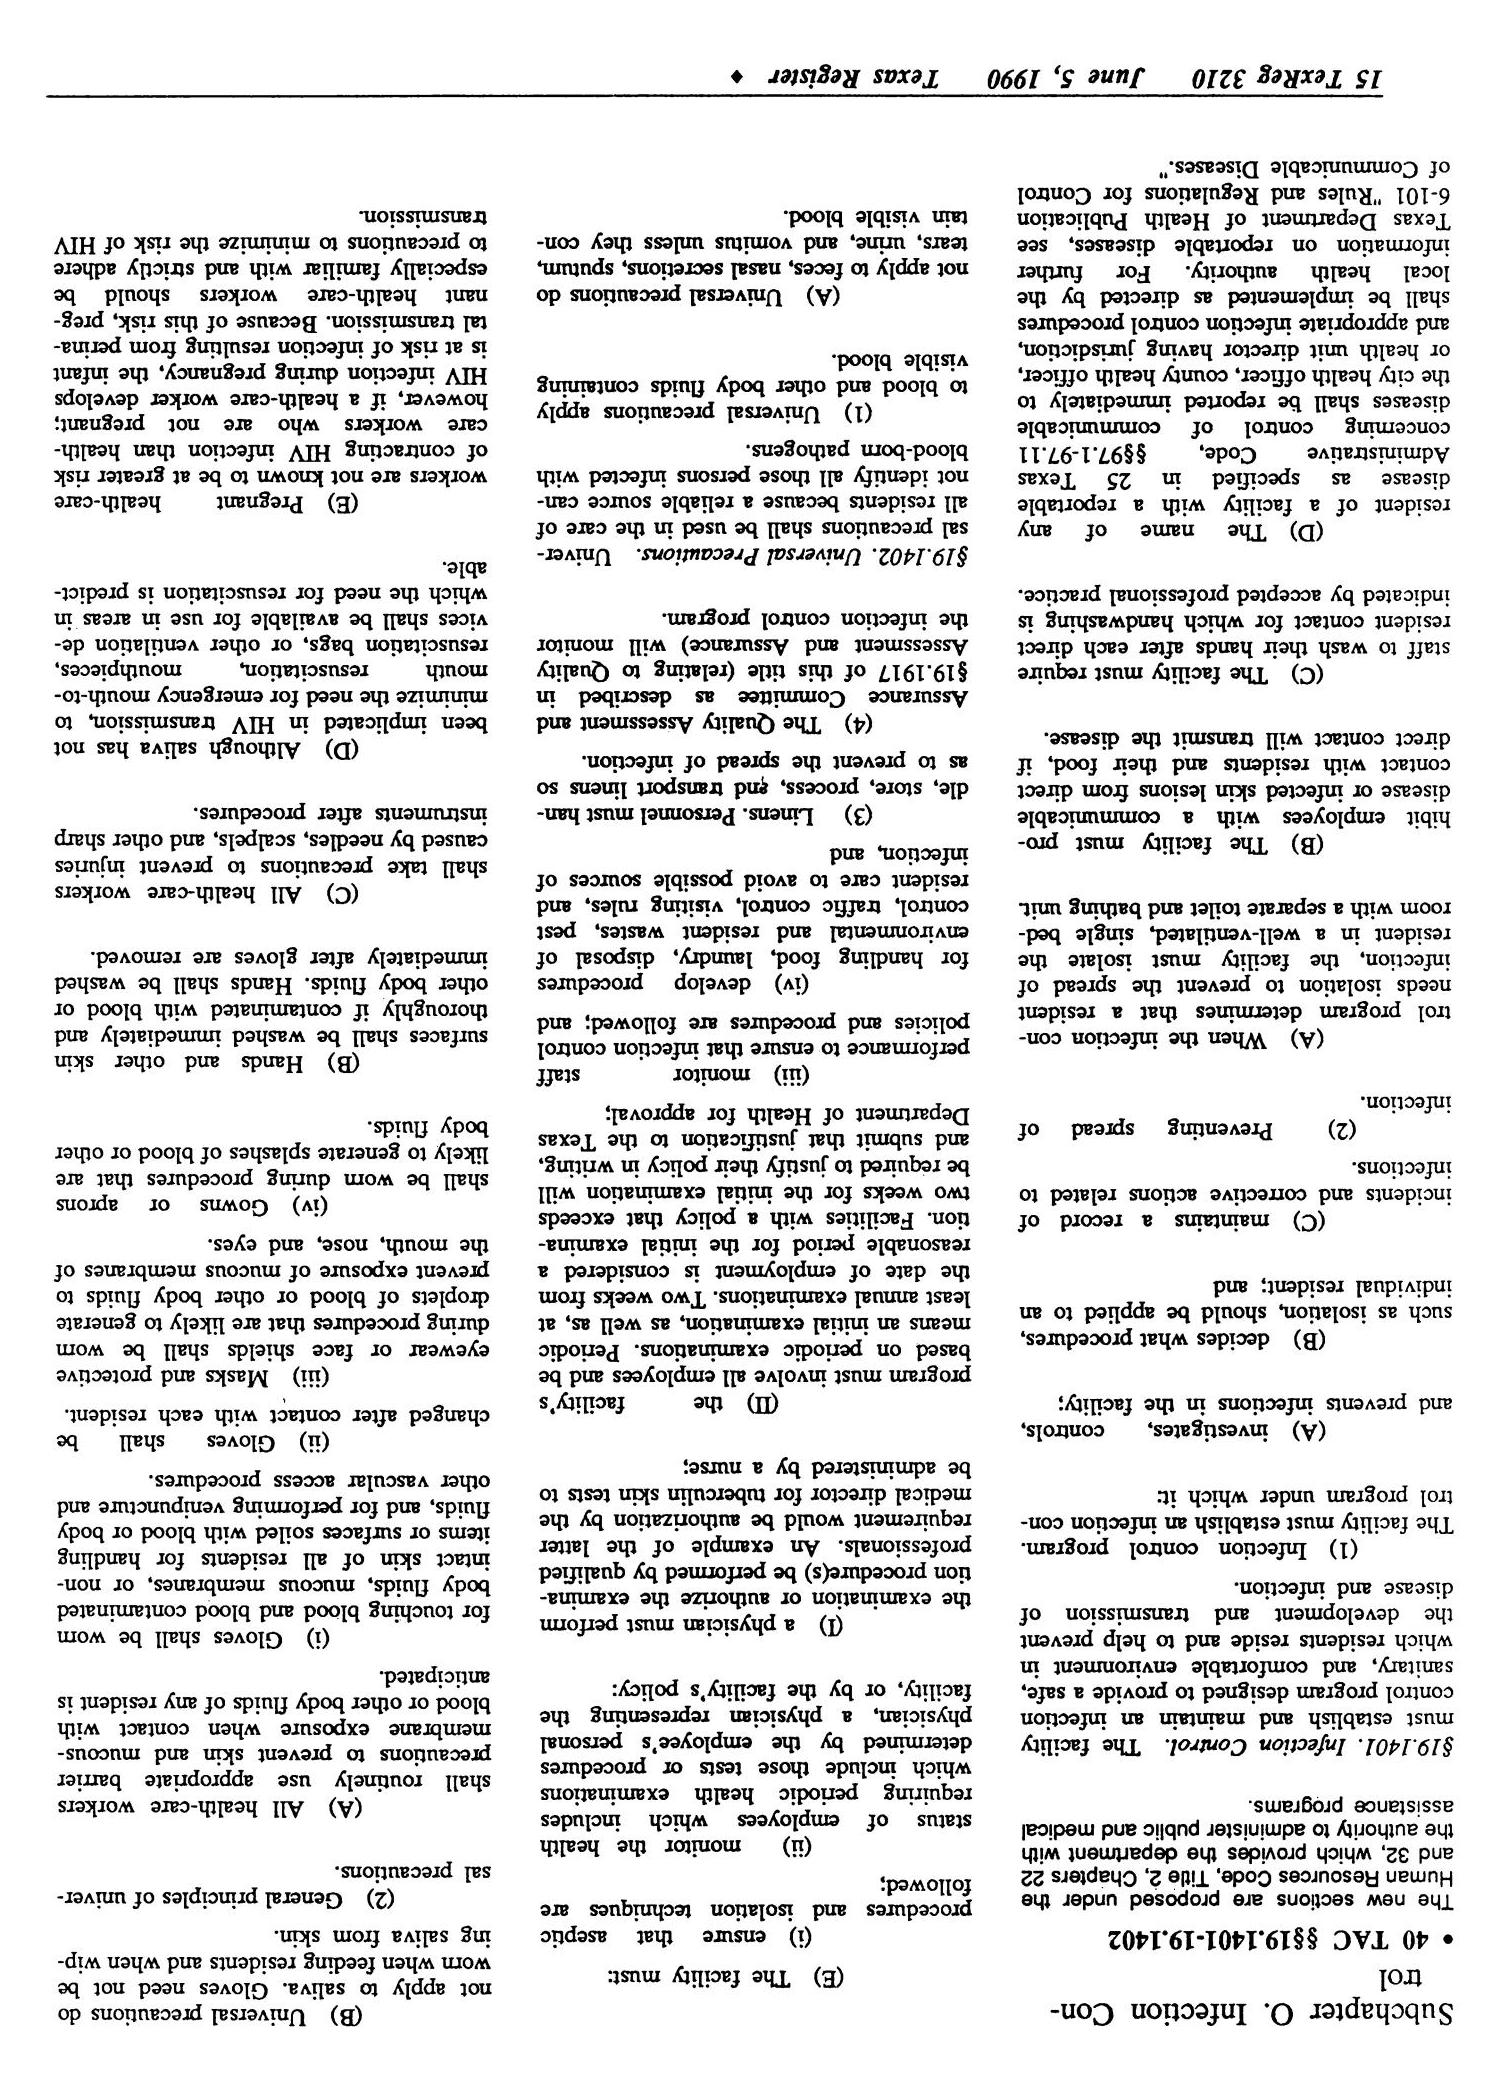 Texas Register, Volume 15, Number 42, (Volume II)Pages 3121-3269, June 5, 1990
                                                
                                                    3210
                                                